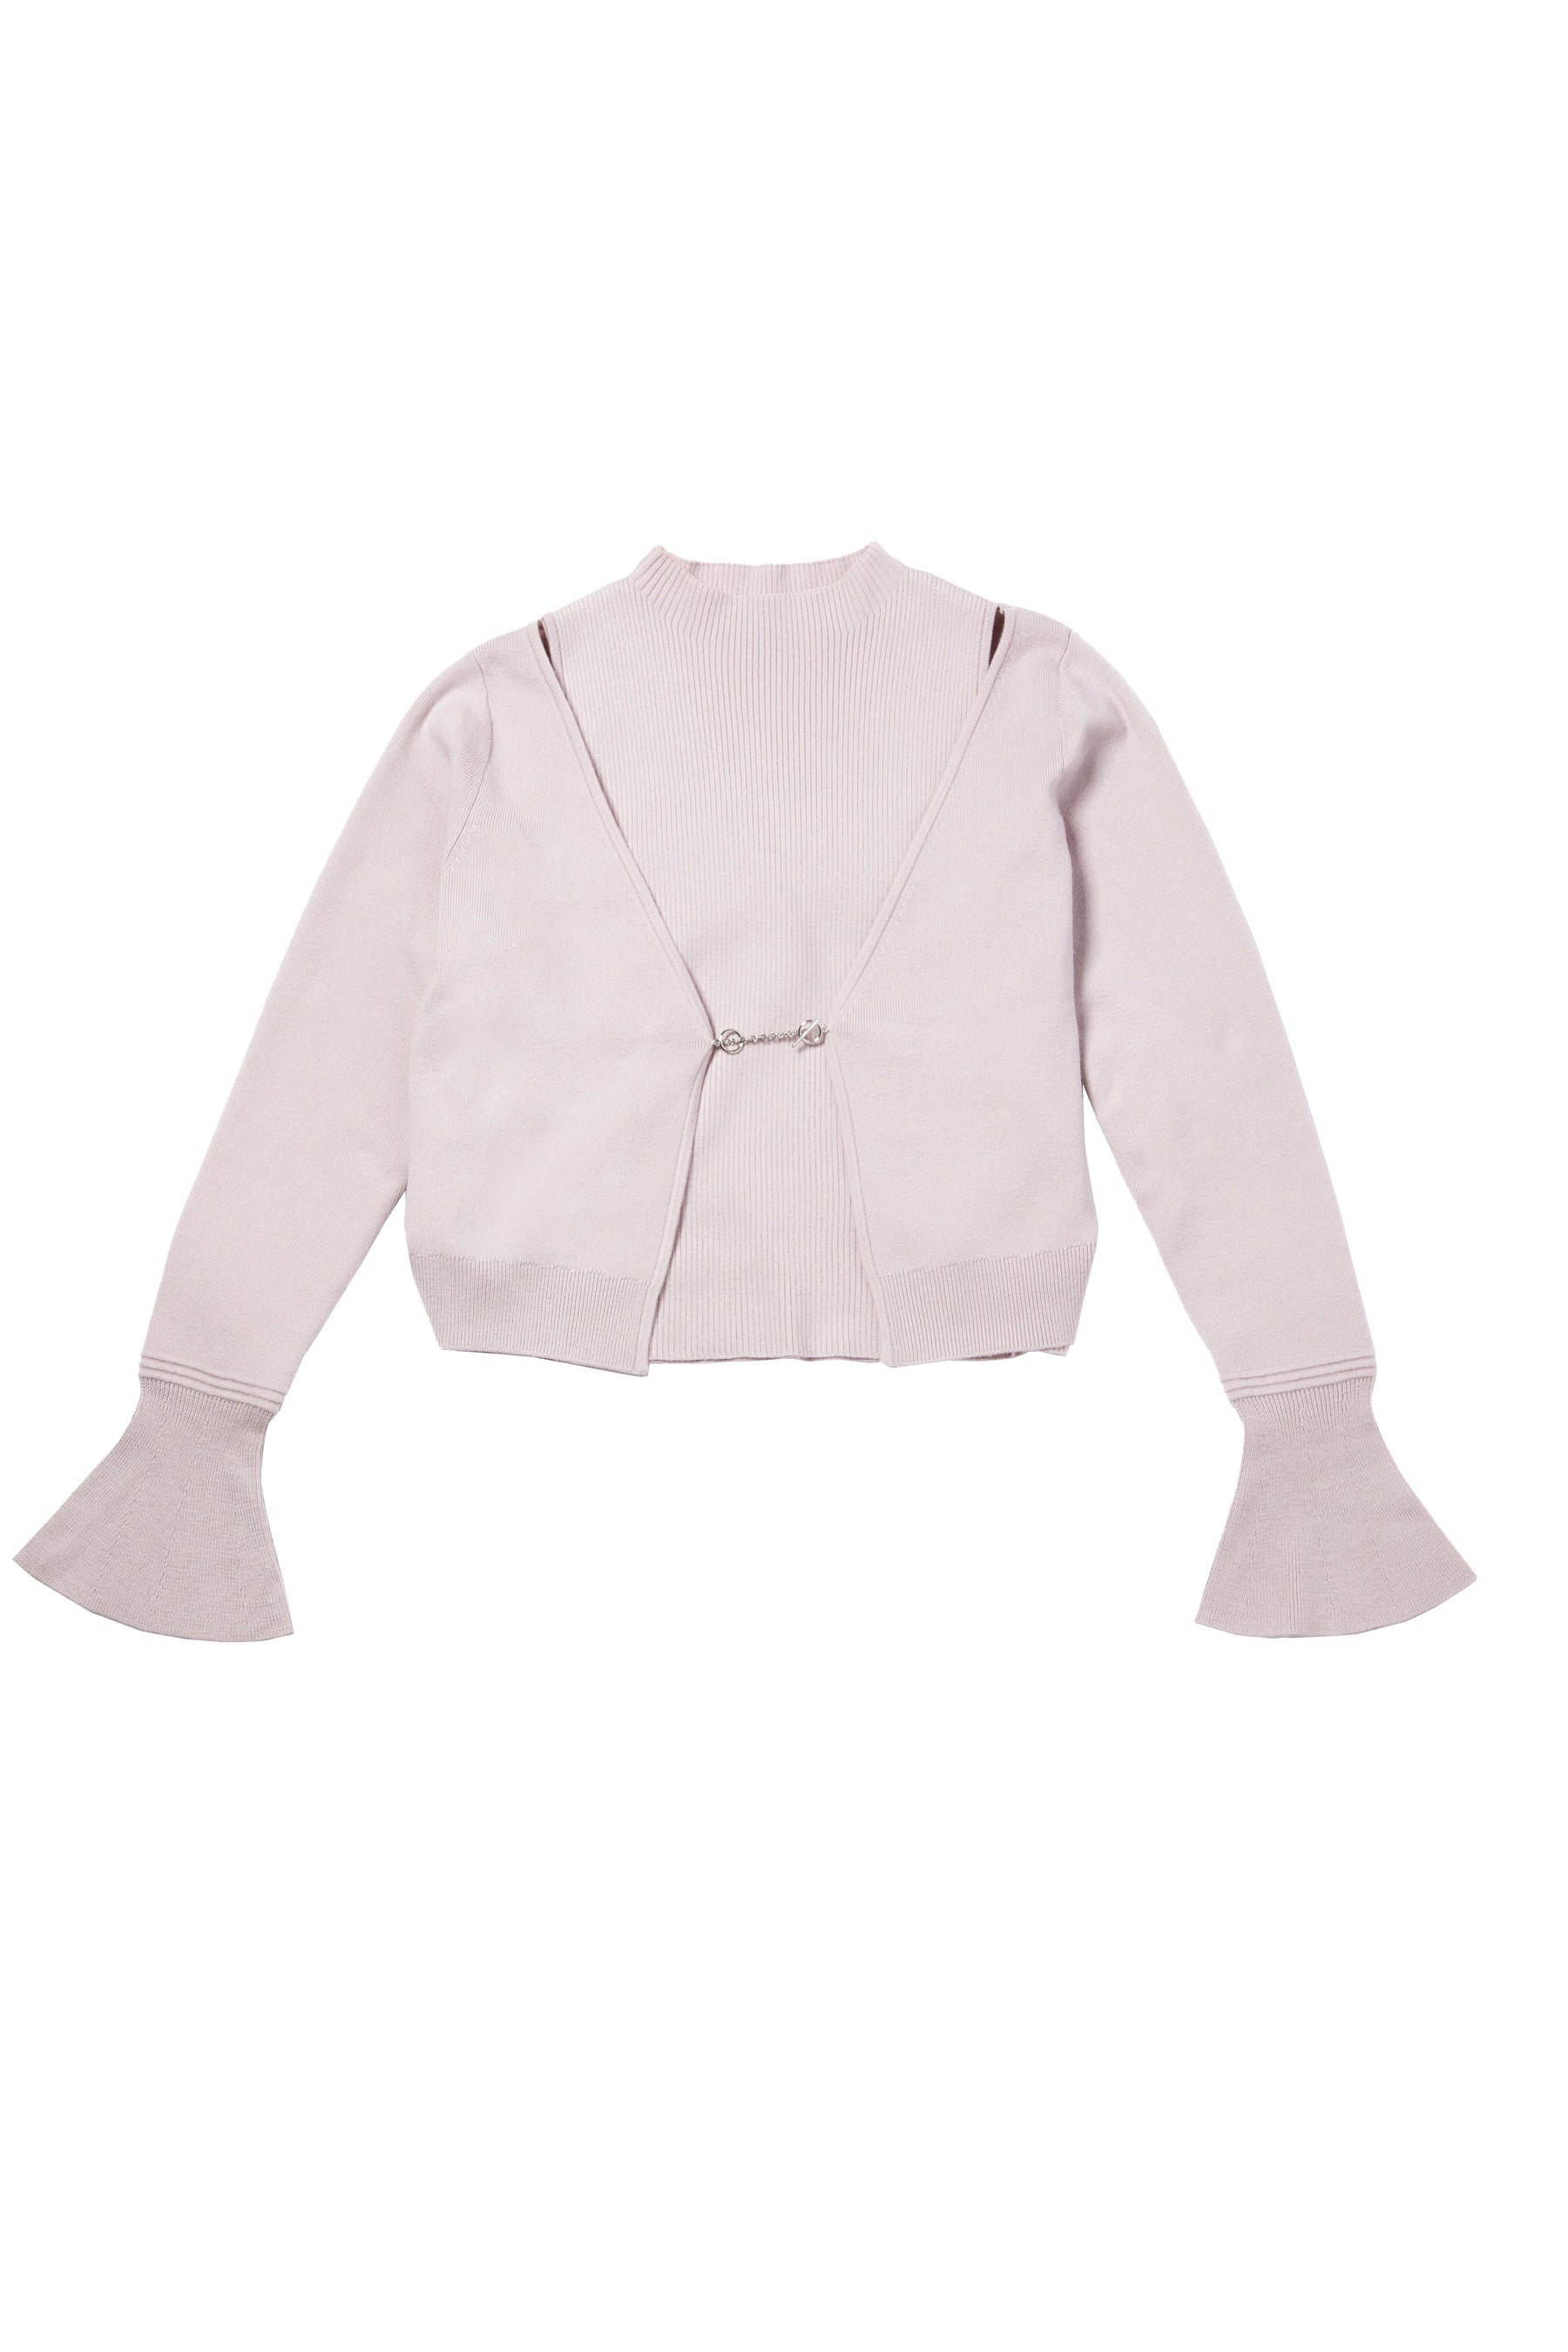 petale】Flared Sleeve Knit Set